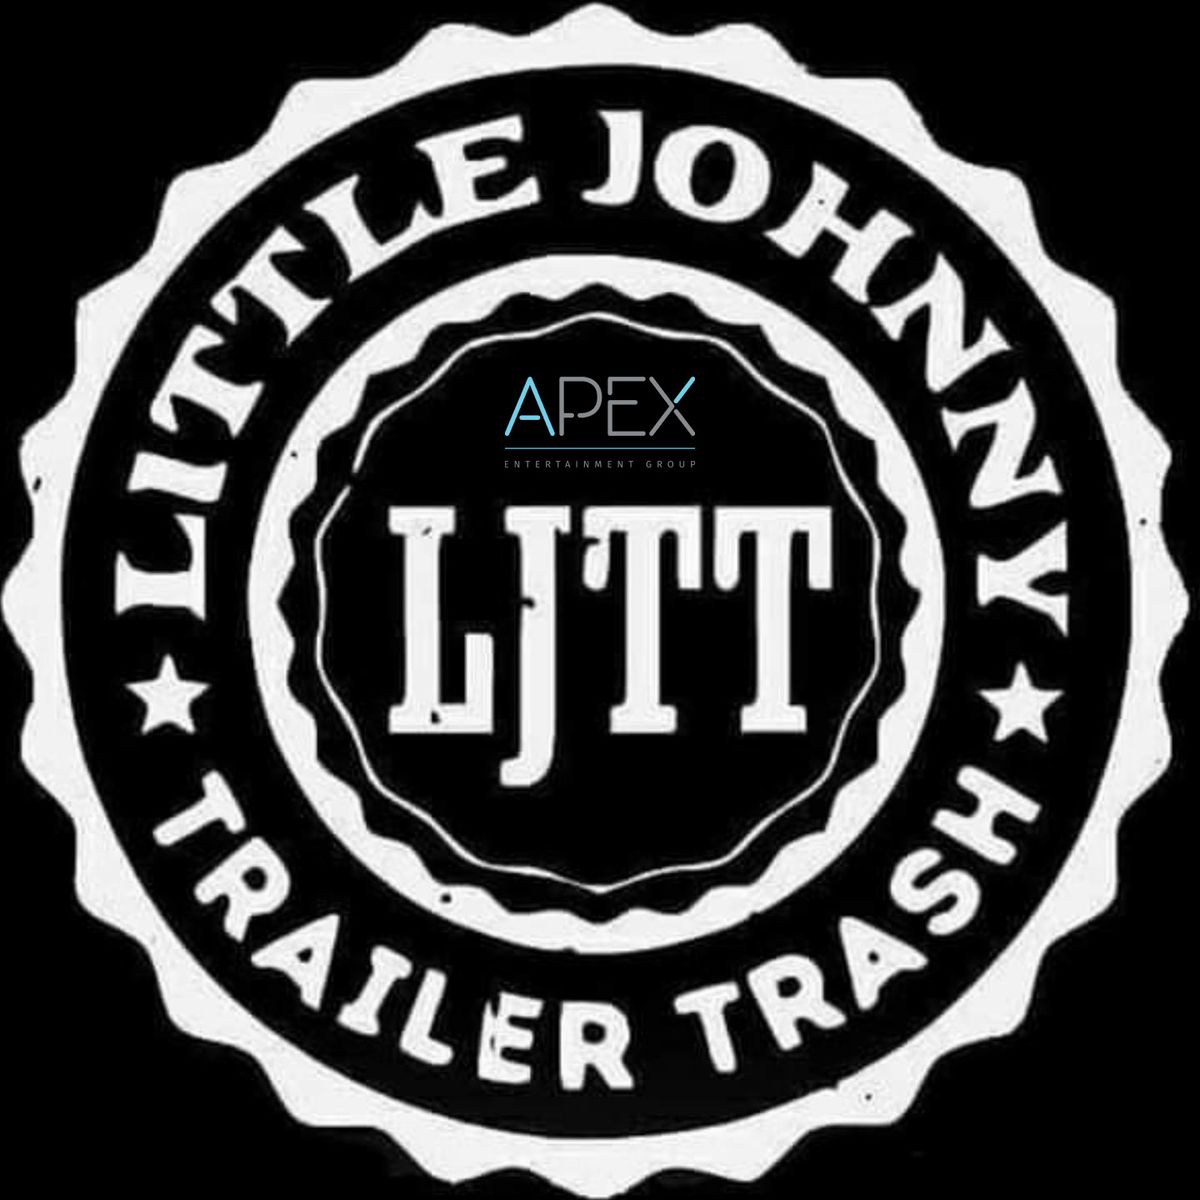 Little Johnny Trailer Trash - Live at Hickory Tavern Ballantyne